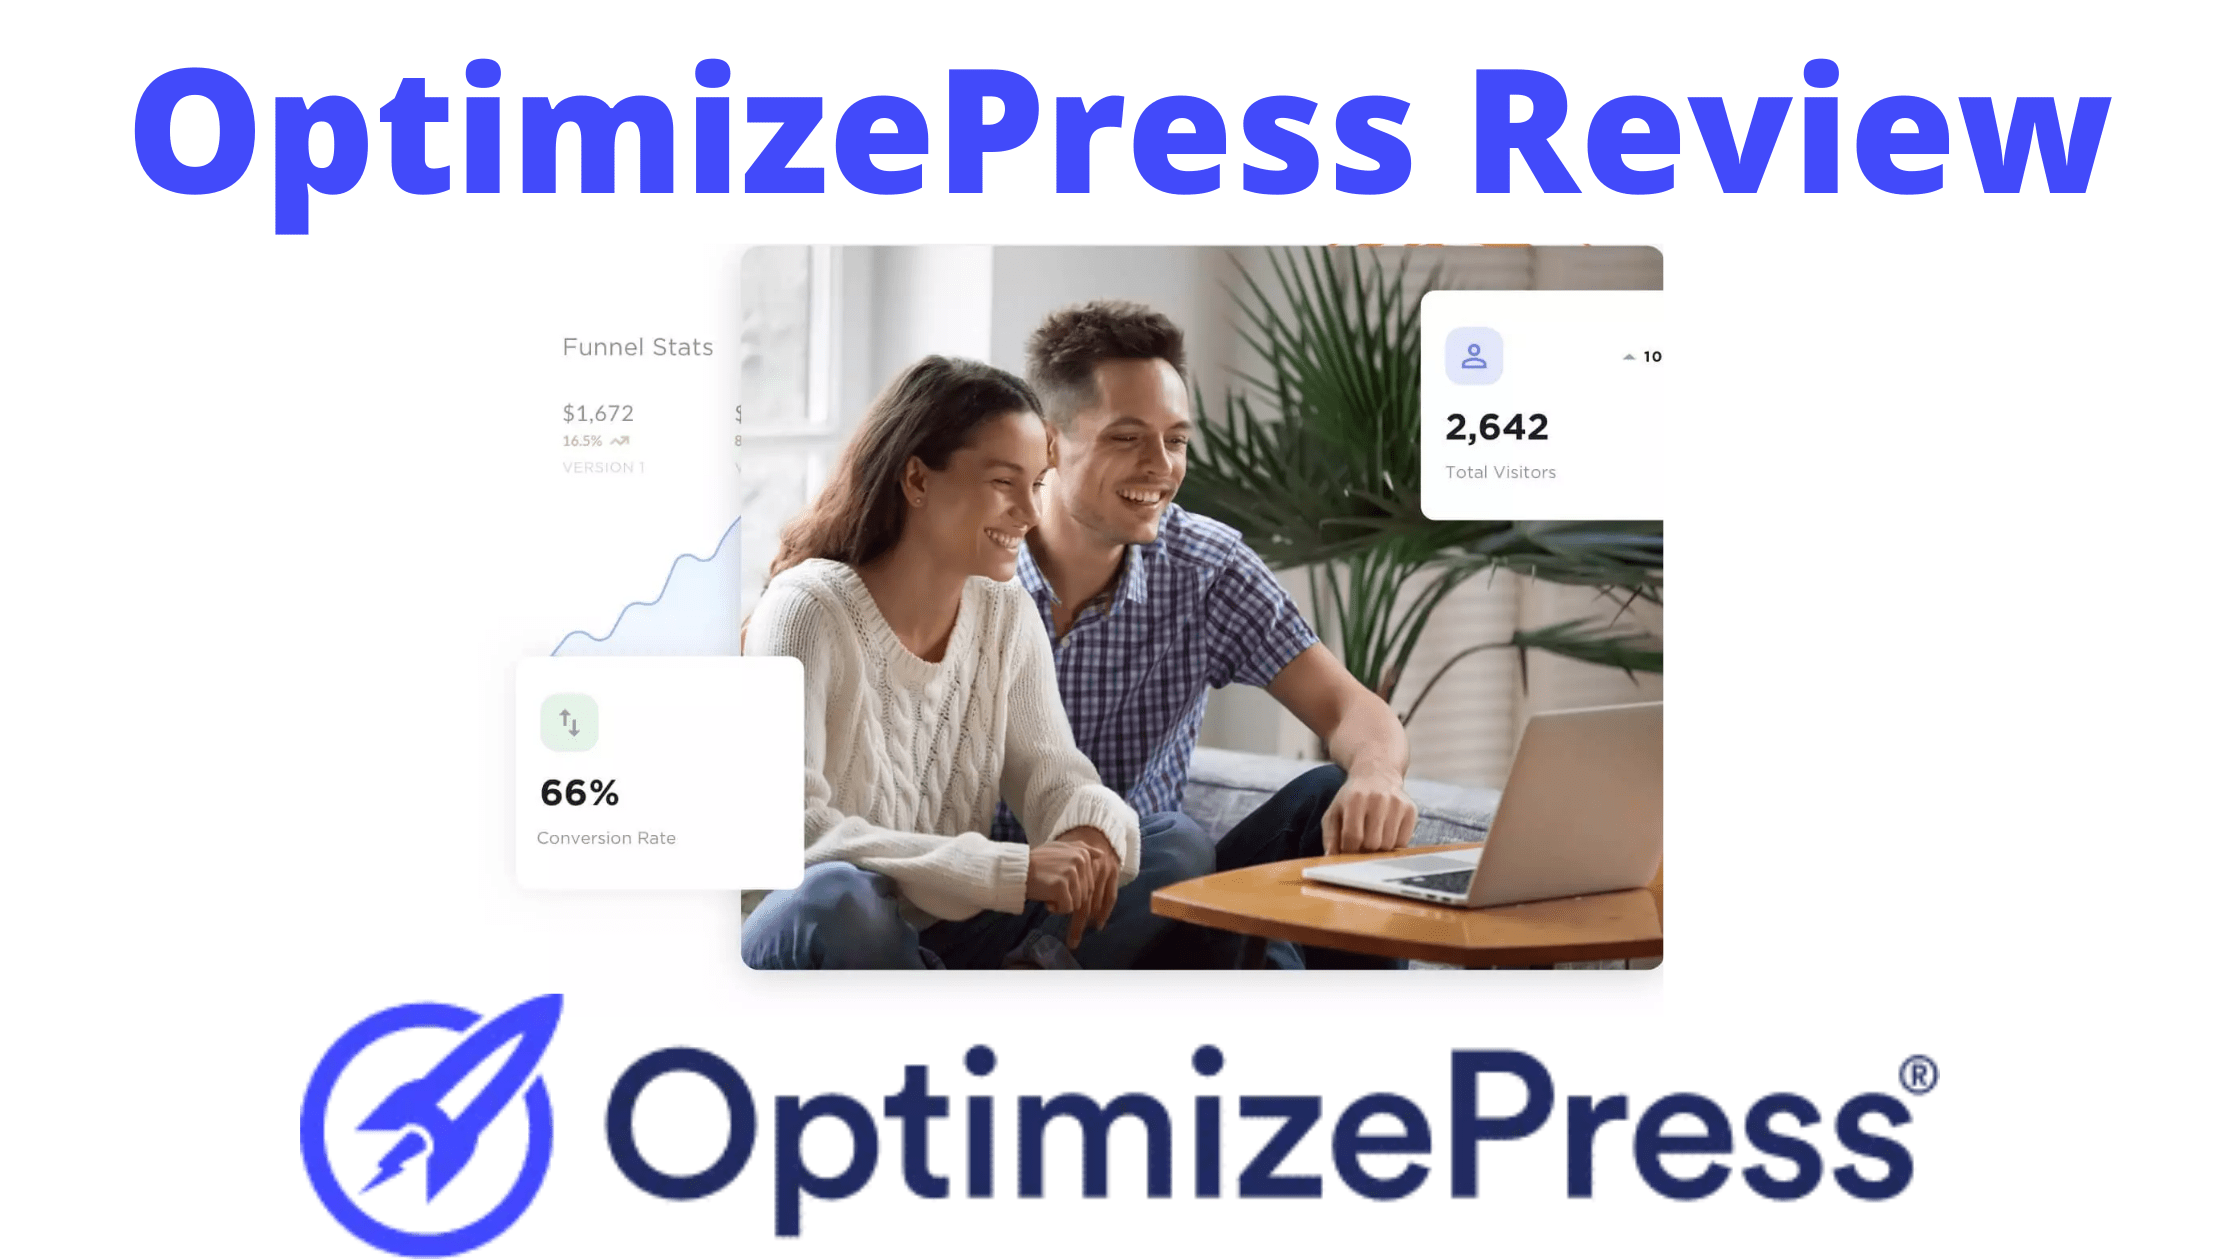 Optimizepress Review